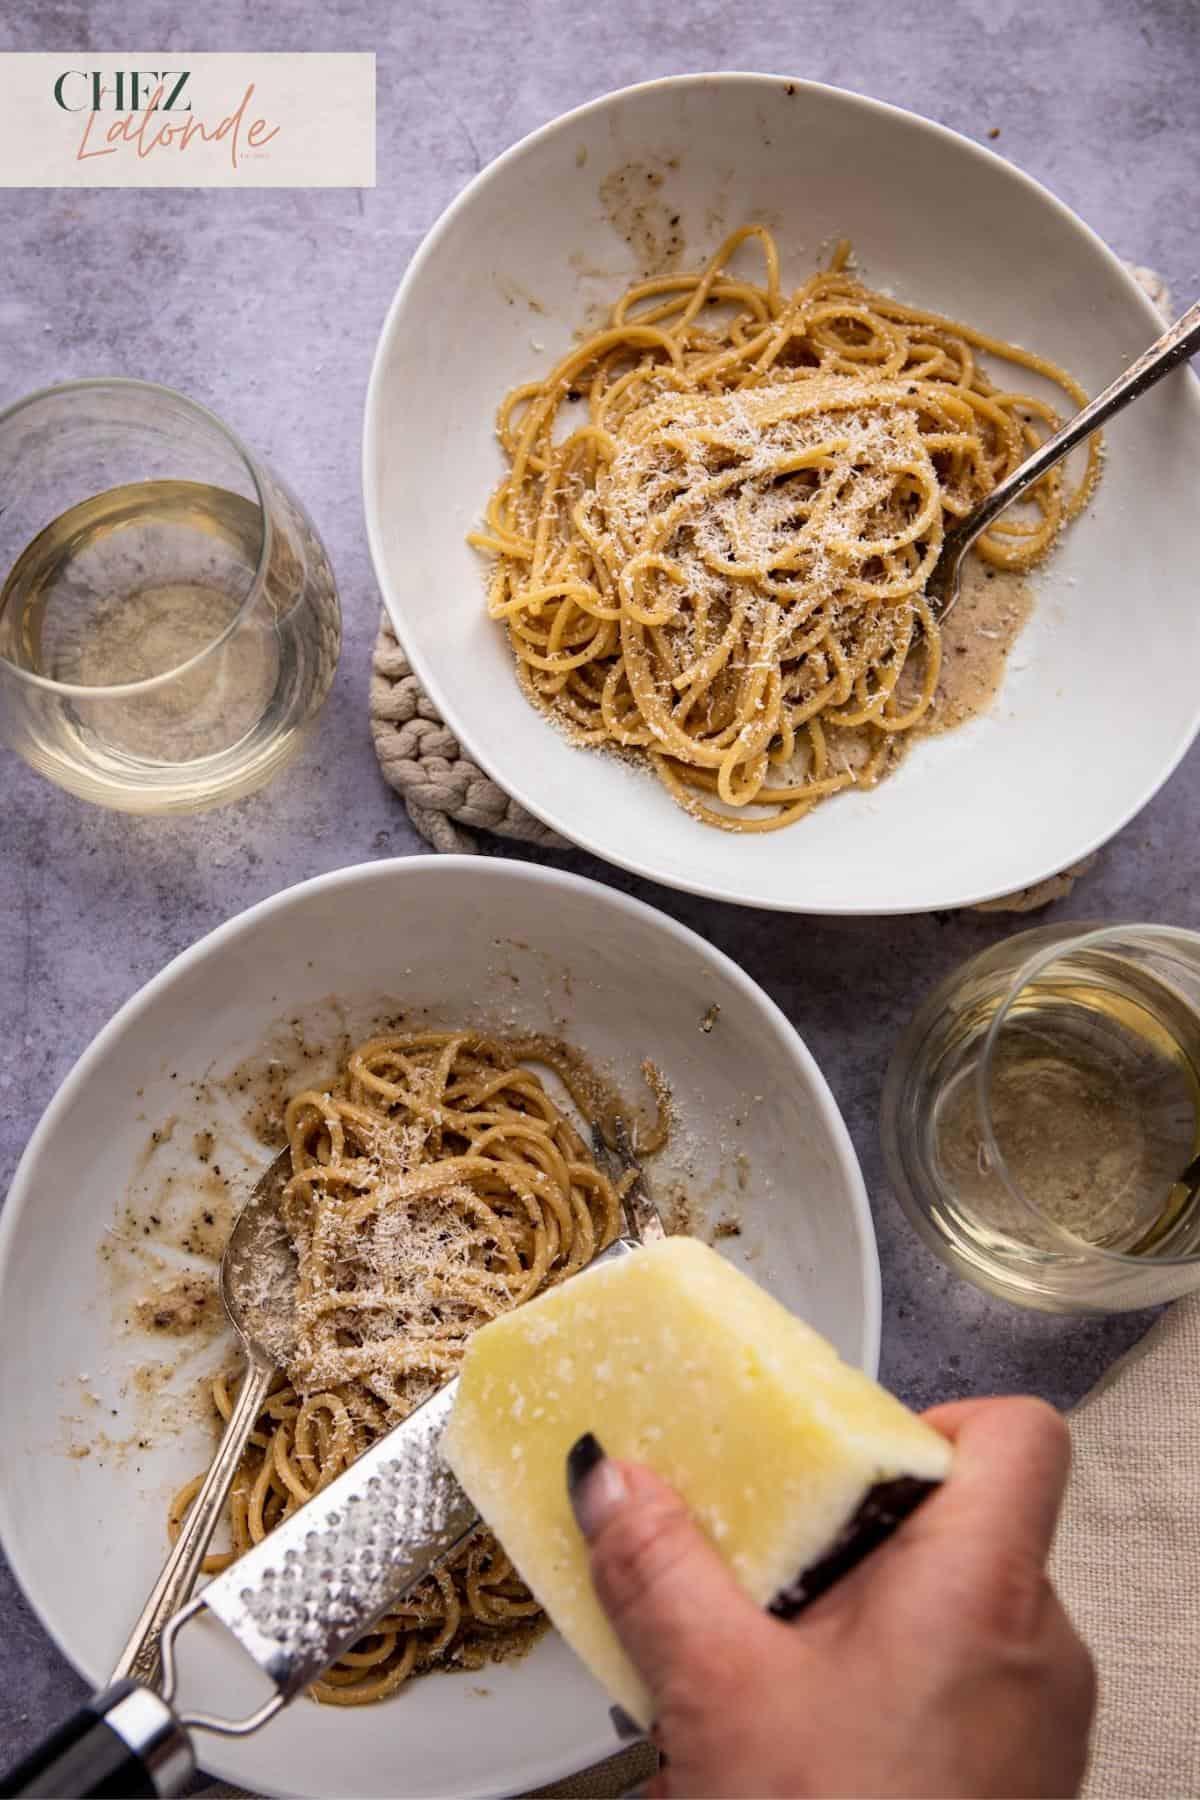 grating pecorino cheese on cacio e pepe pasta.